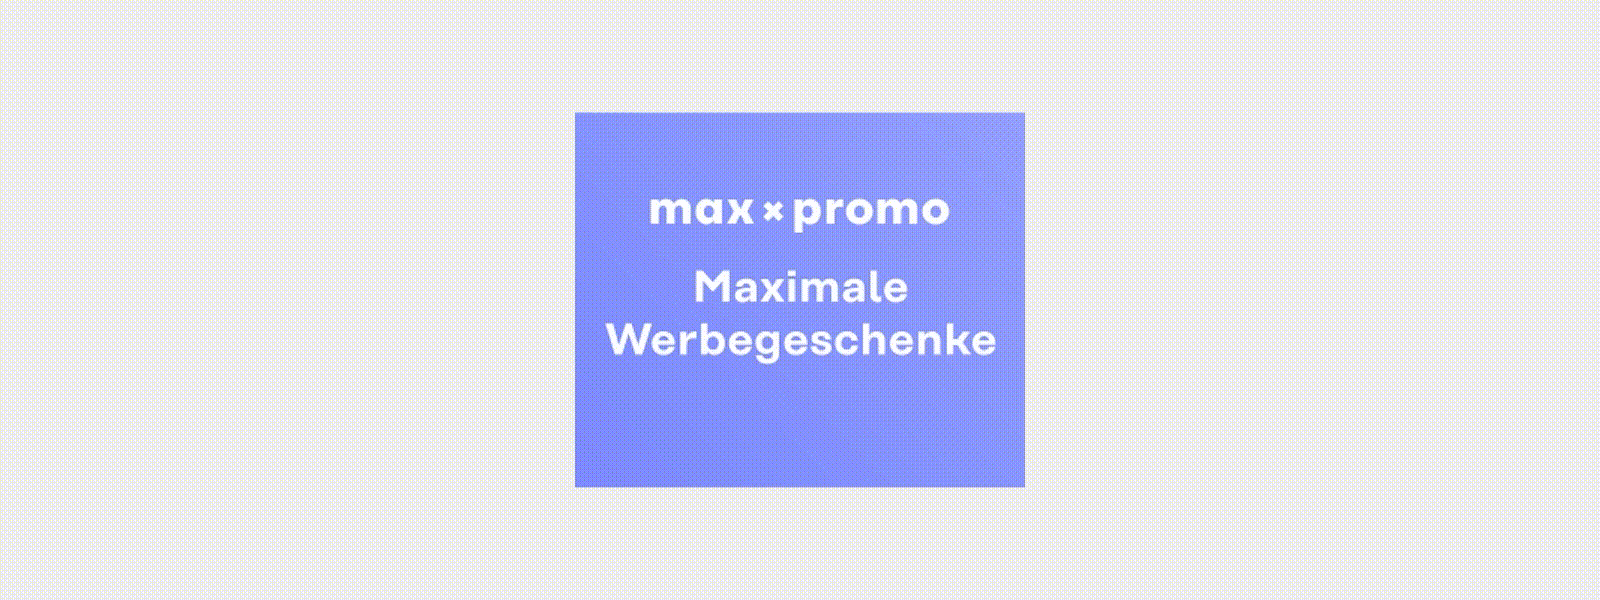 maxxpromo kampagne werbung